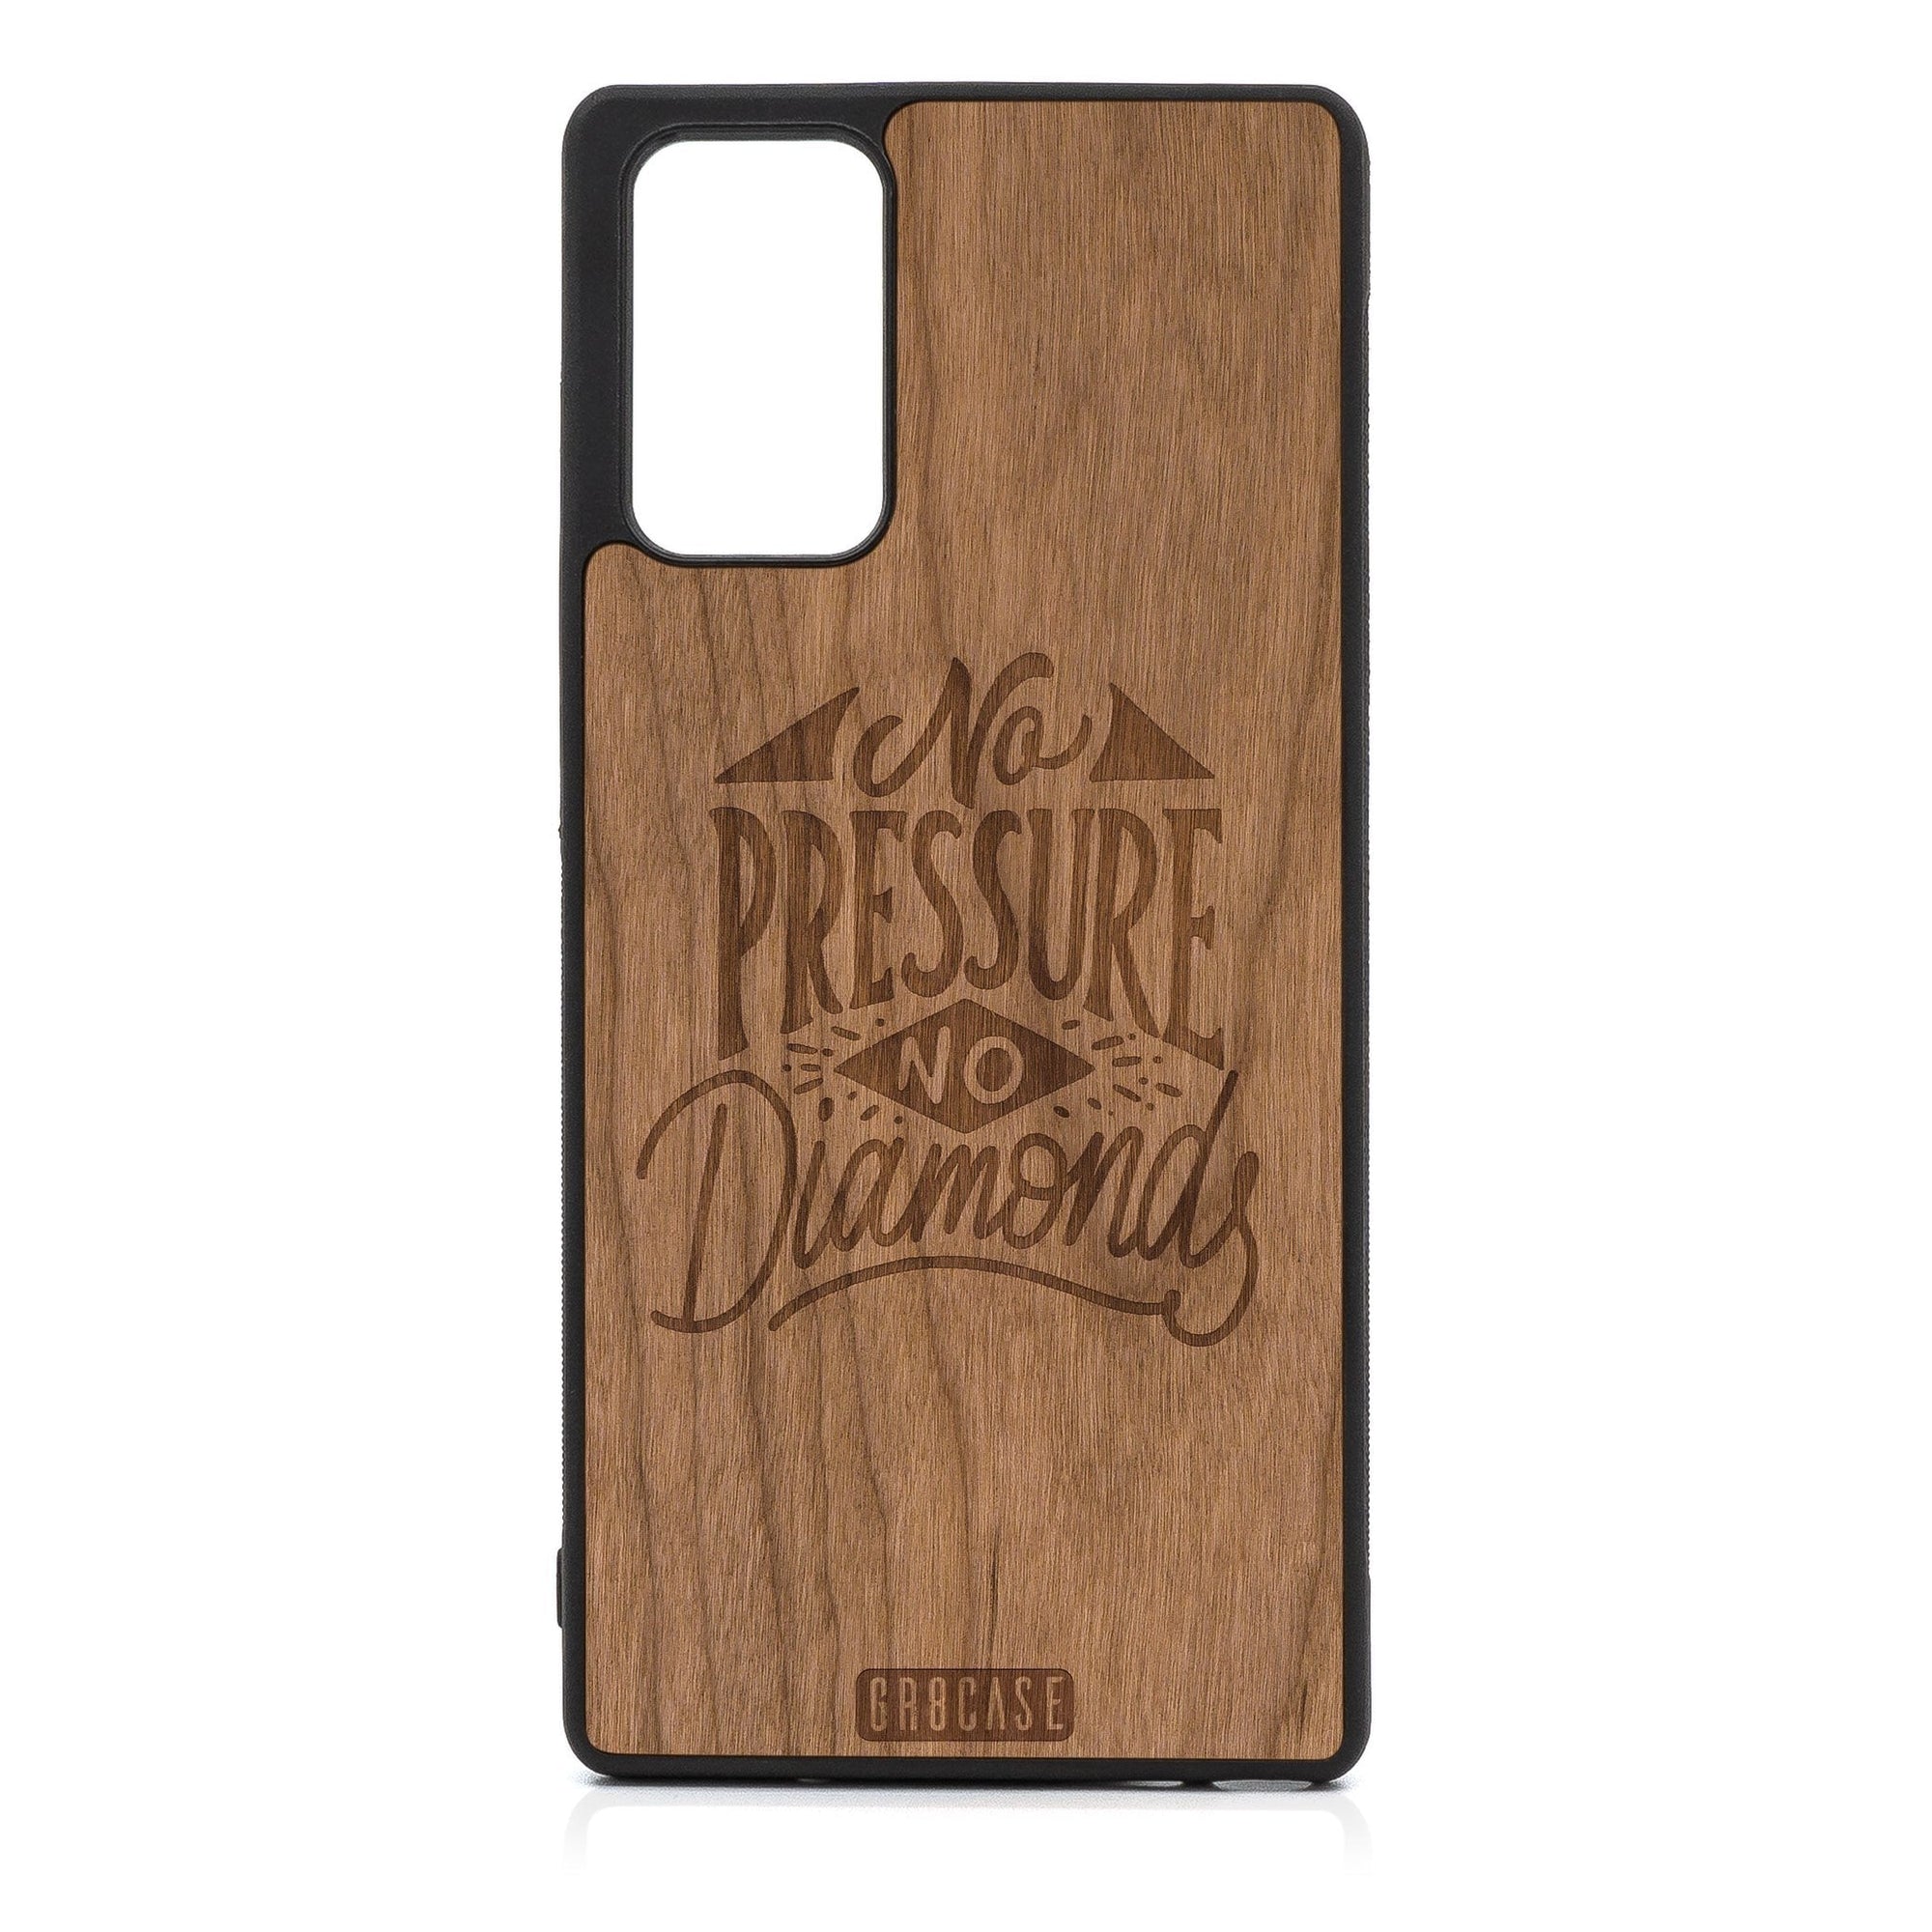 No Pressure No Diamonds Design Wood Case For Samsung Galaxy A53 5G